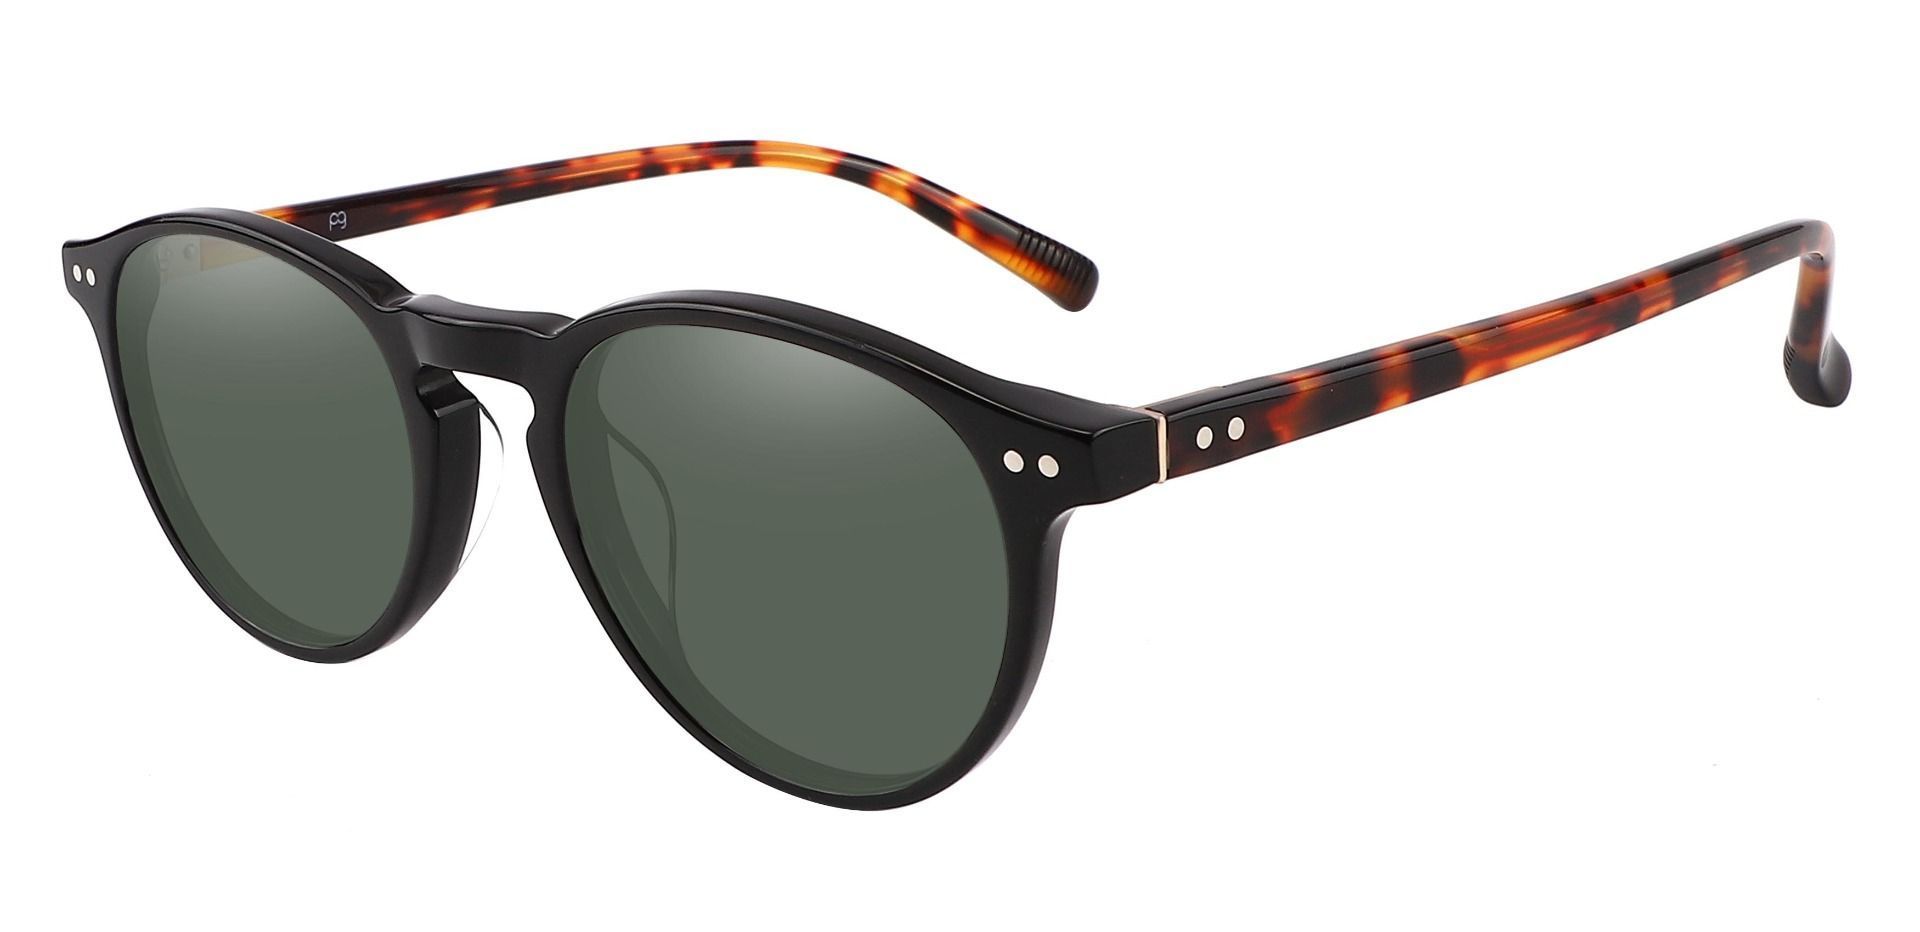 Monarch Oval Prescription Sunglasses - Black Frame With Green Lenses